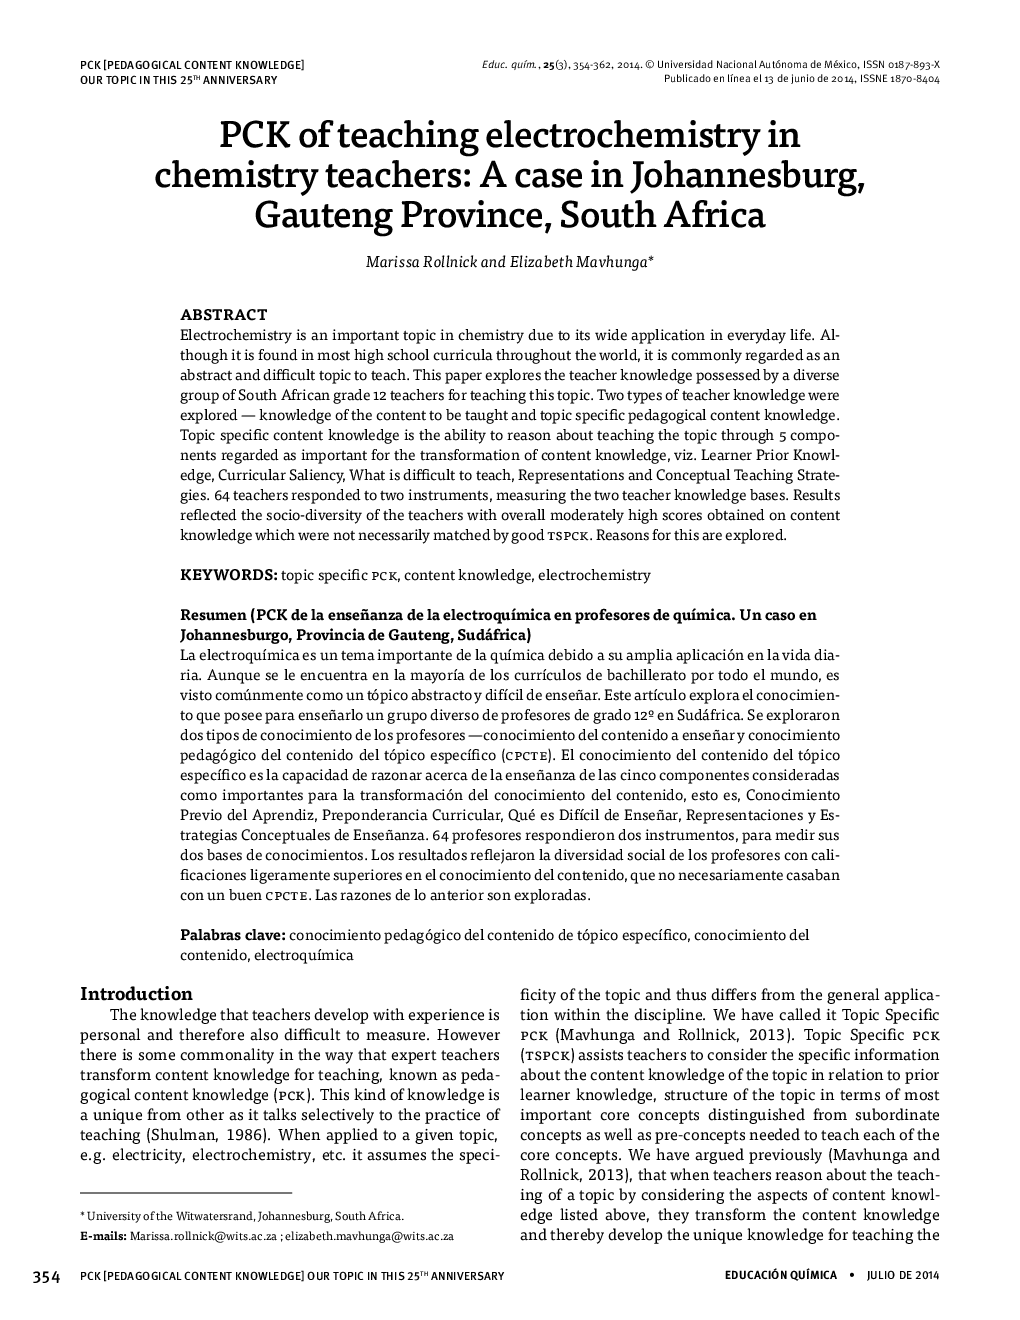 PCK of teaching electrochemistry in chemistry teachers: A case in Johannesburg, Gauteng Province, South Africa